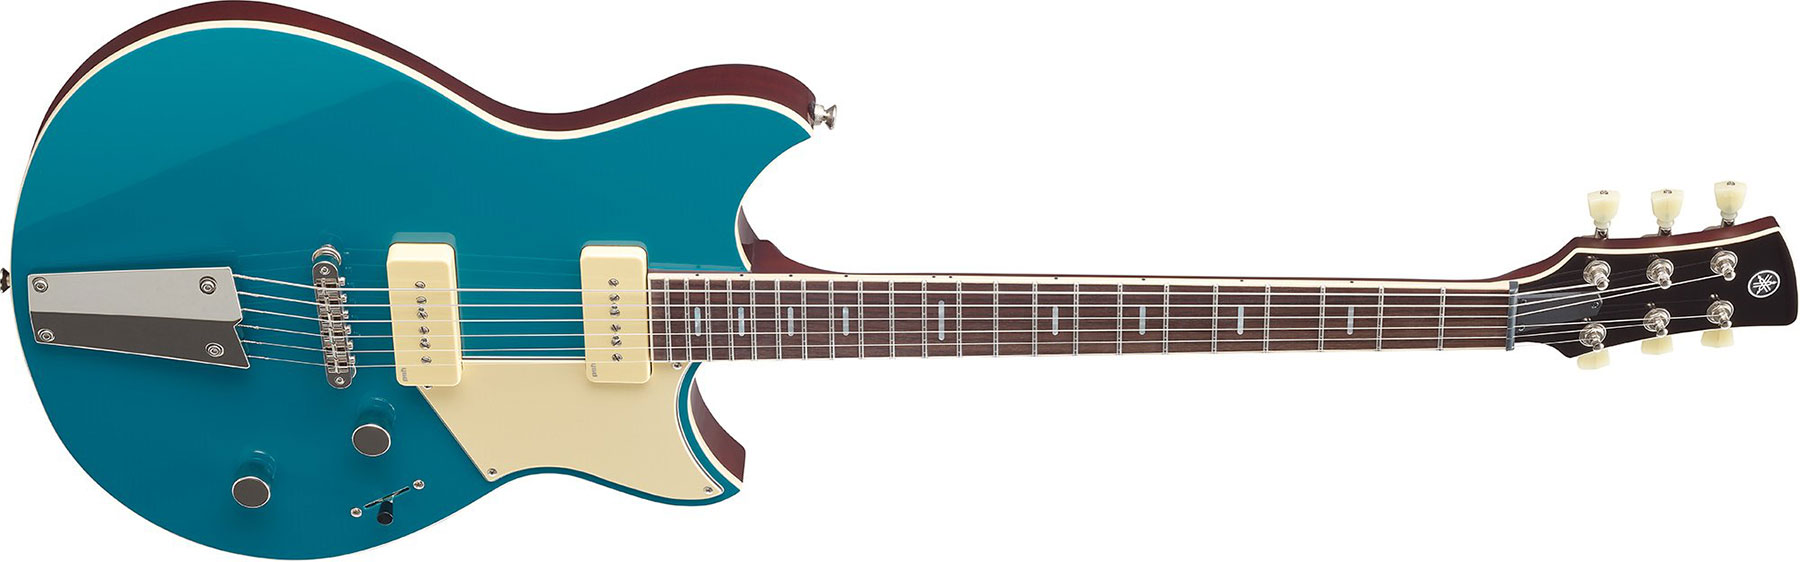 Yamaha Rss02t Revstar Standard 2p90 Ht Rw - Swift Blue - Double cut electric guitar - Variation 1